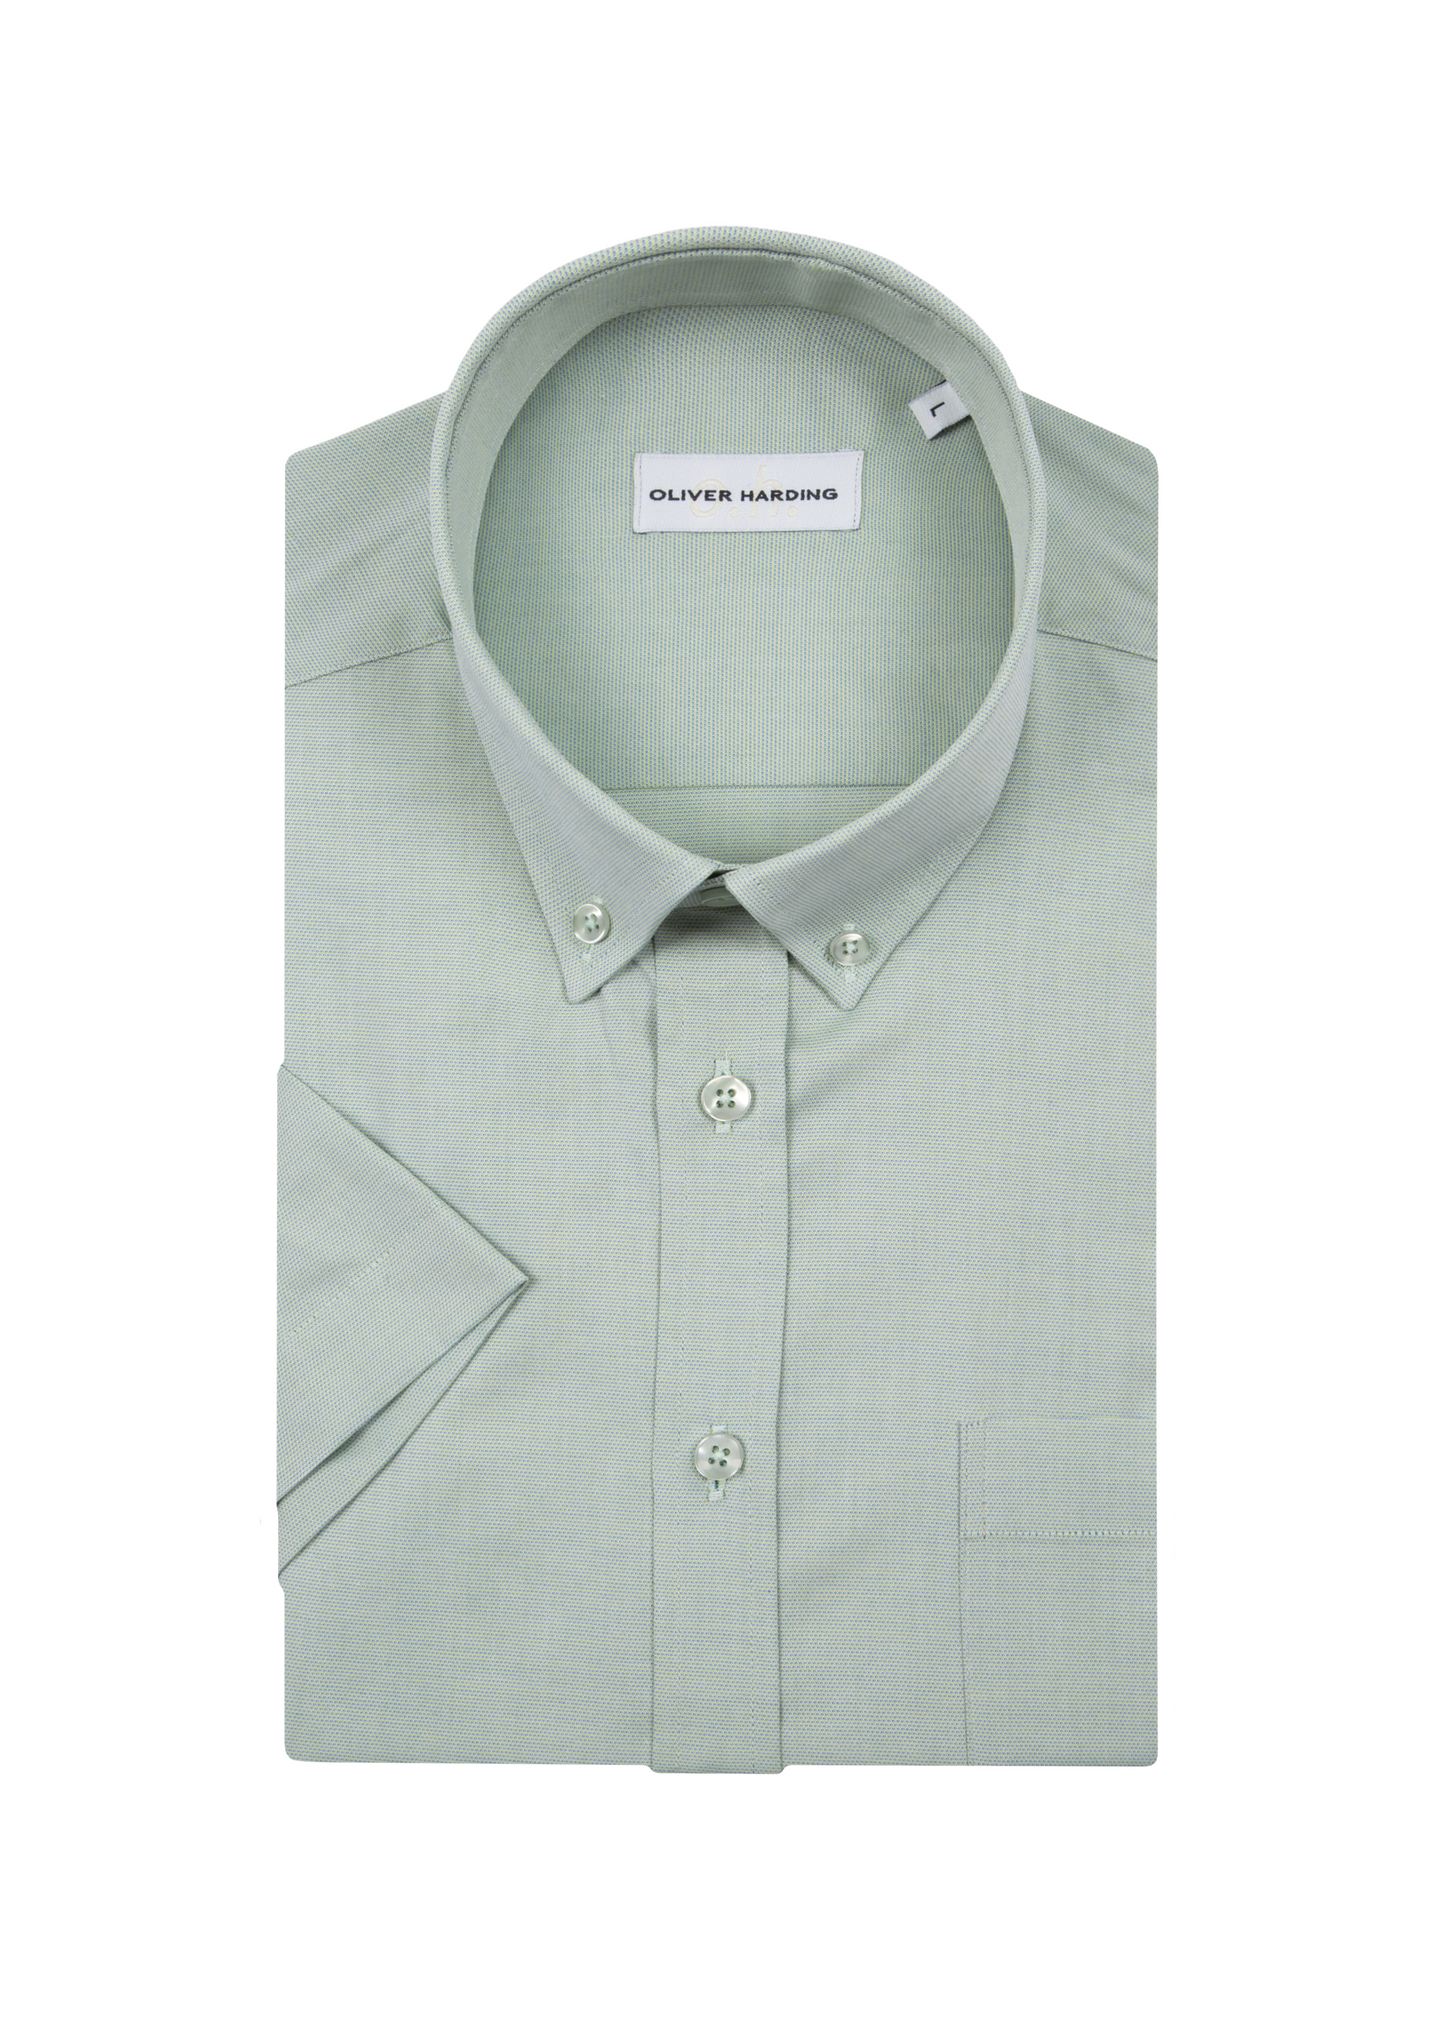 Premium Mint Short Sleeve Shirt